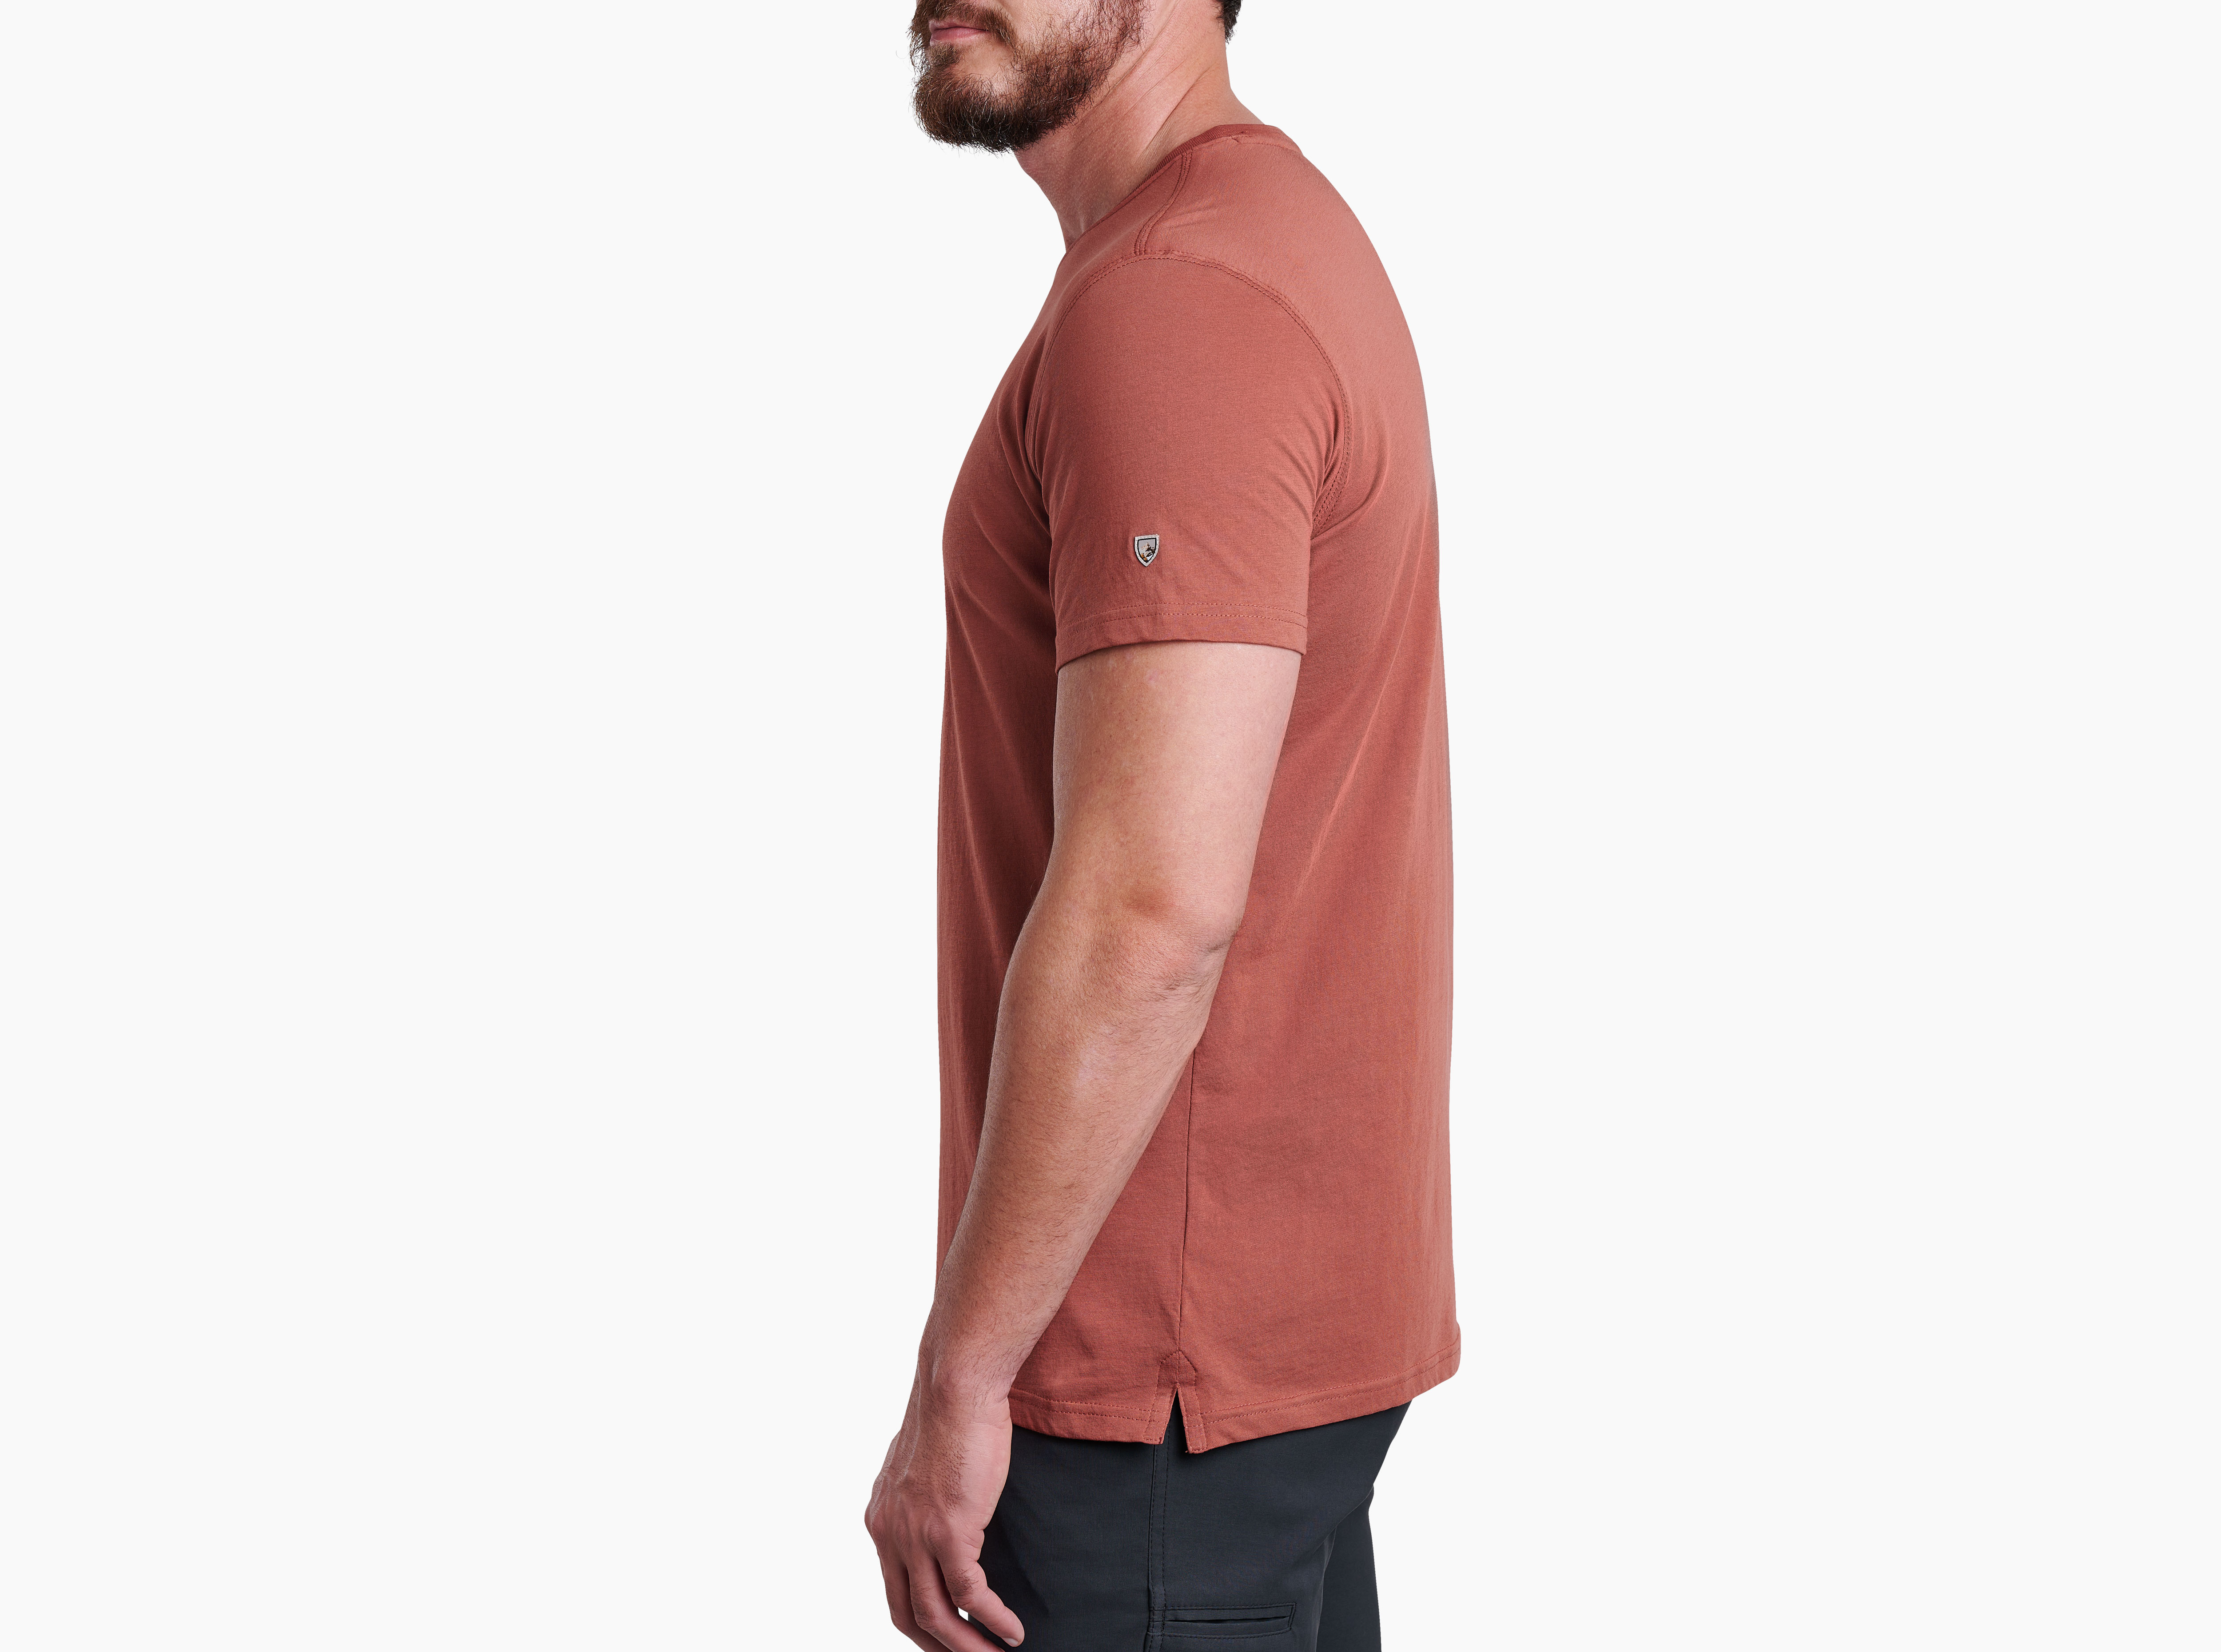 Kuhl Klimitzer Shirt Review - Super Comfortable Casual Shirt - Engearment